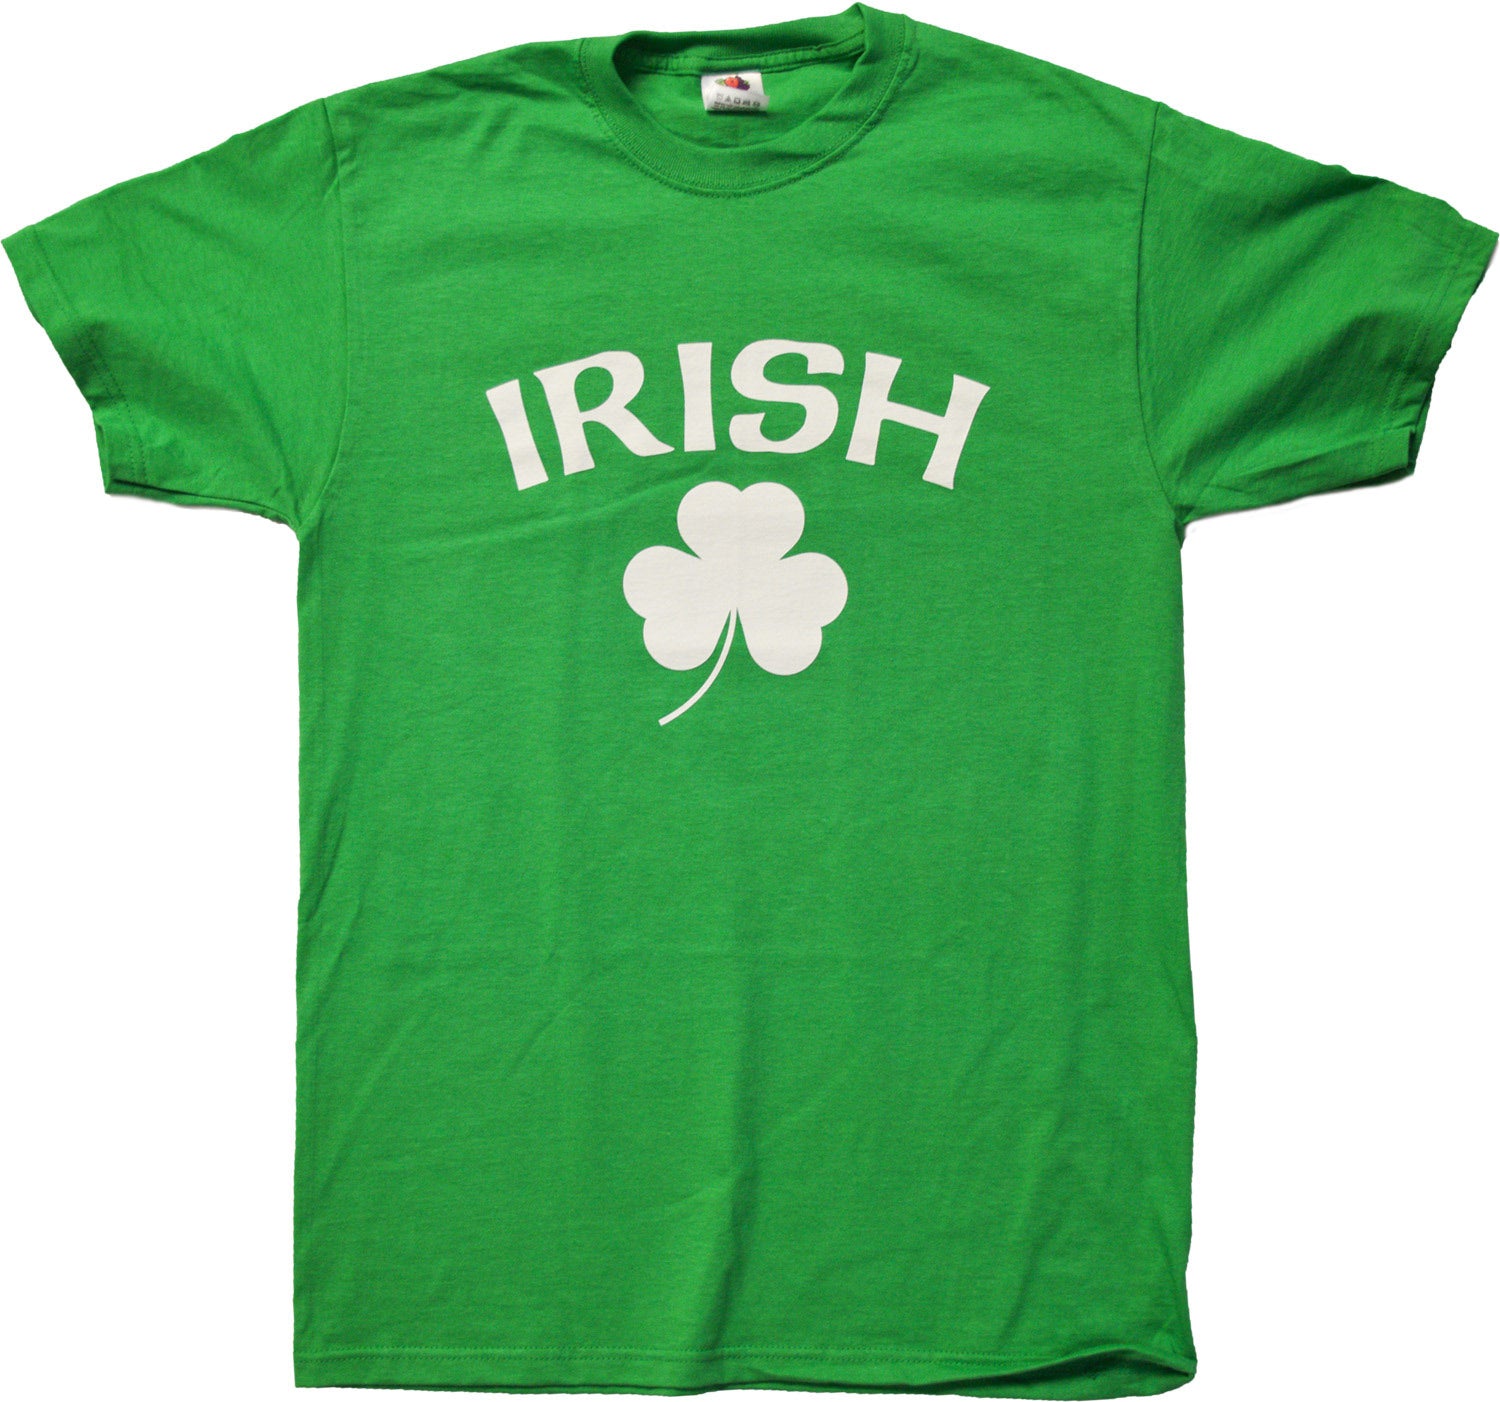 DETROIT TIGERS IRISH HERITAGE NIGHT T SHIRT XL GREEN St. Patrick's Day, #1916761888